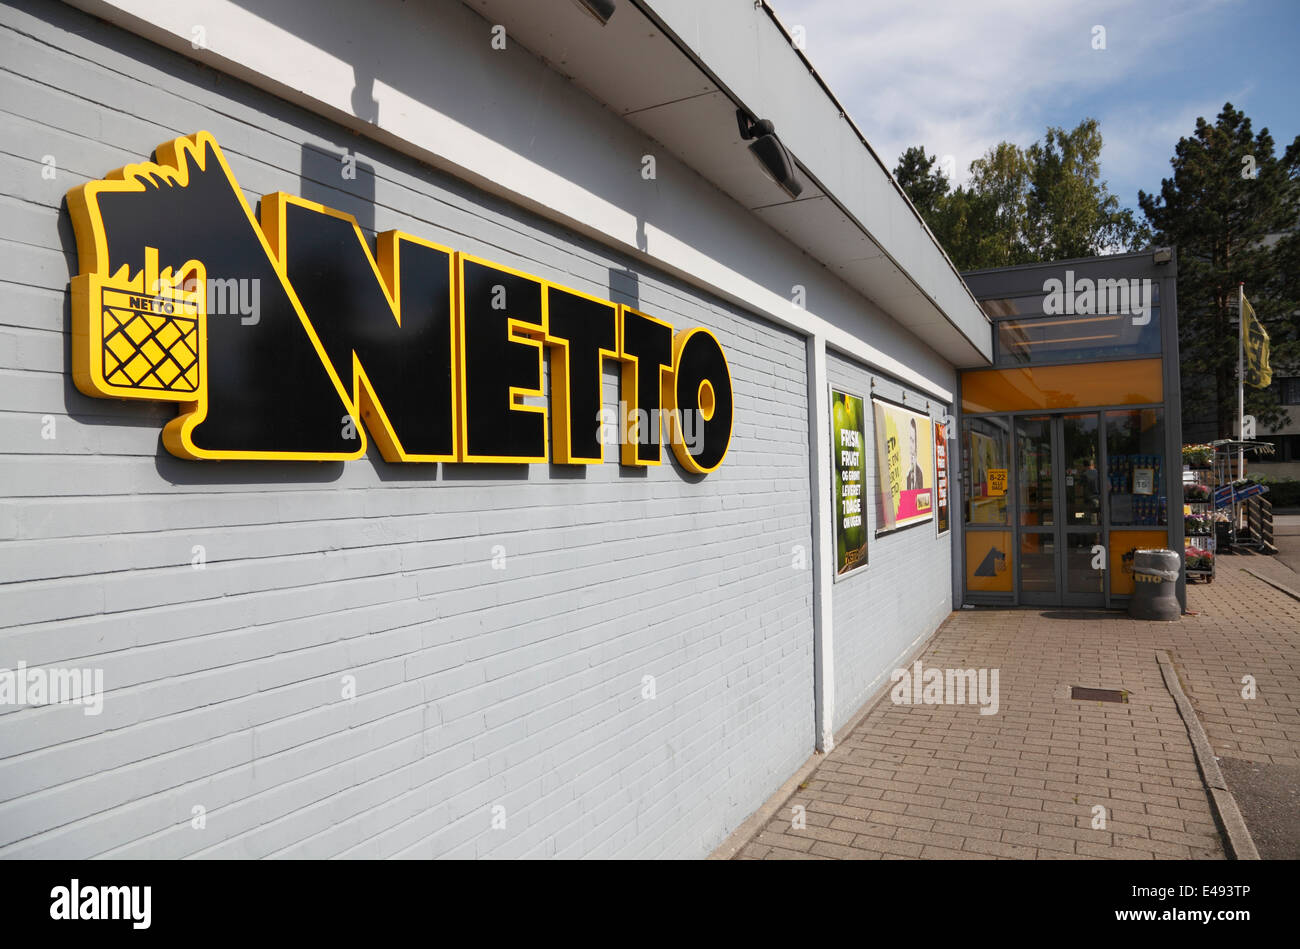 Netto discount supermarket in North Sealand, Denmark. Stock Photo